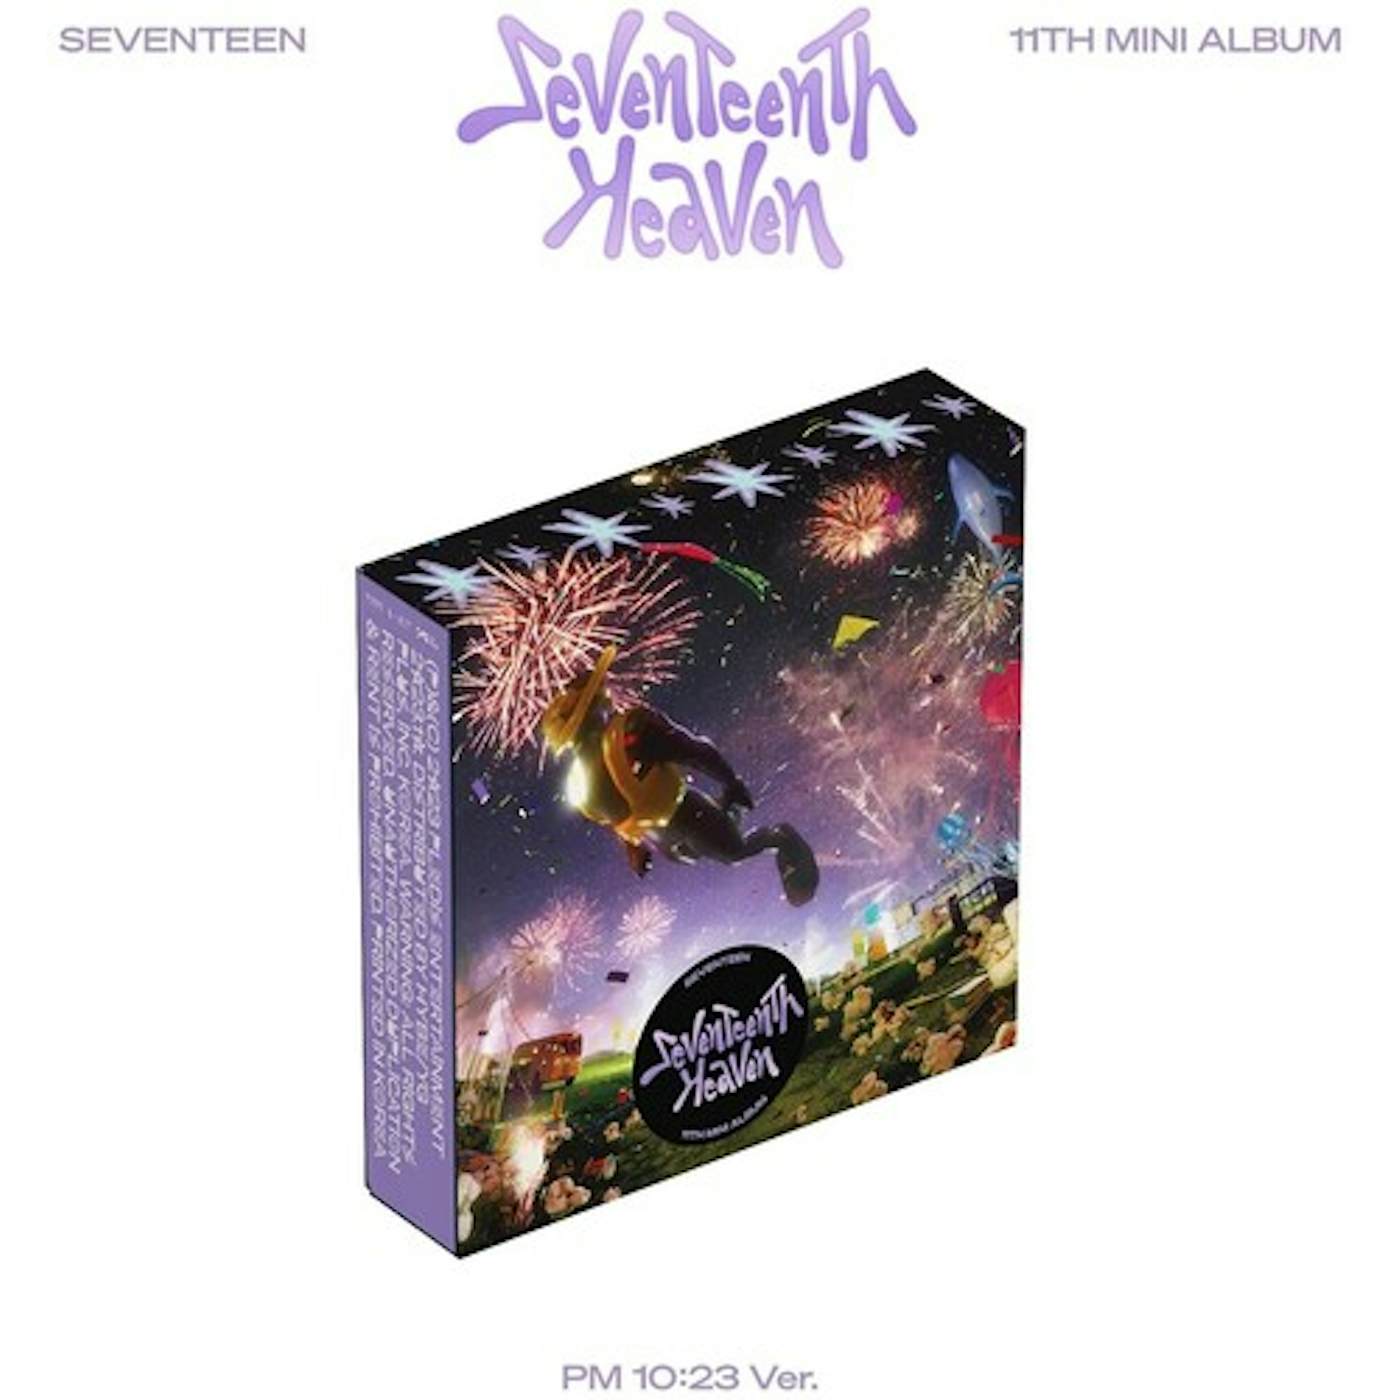 11TH MINI ALBUM 'SEVENTEENTH HEAVEN' PM 10:23 VER CD